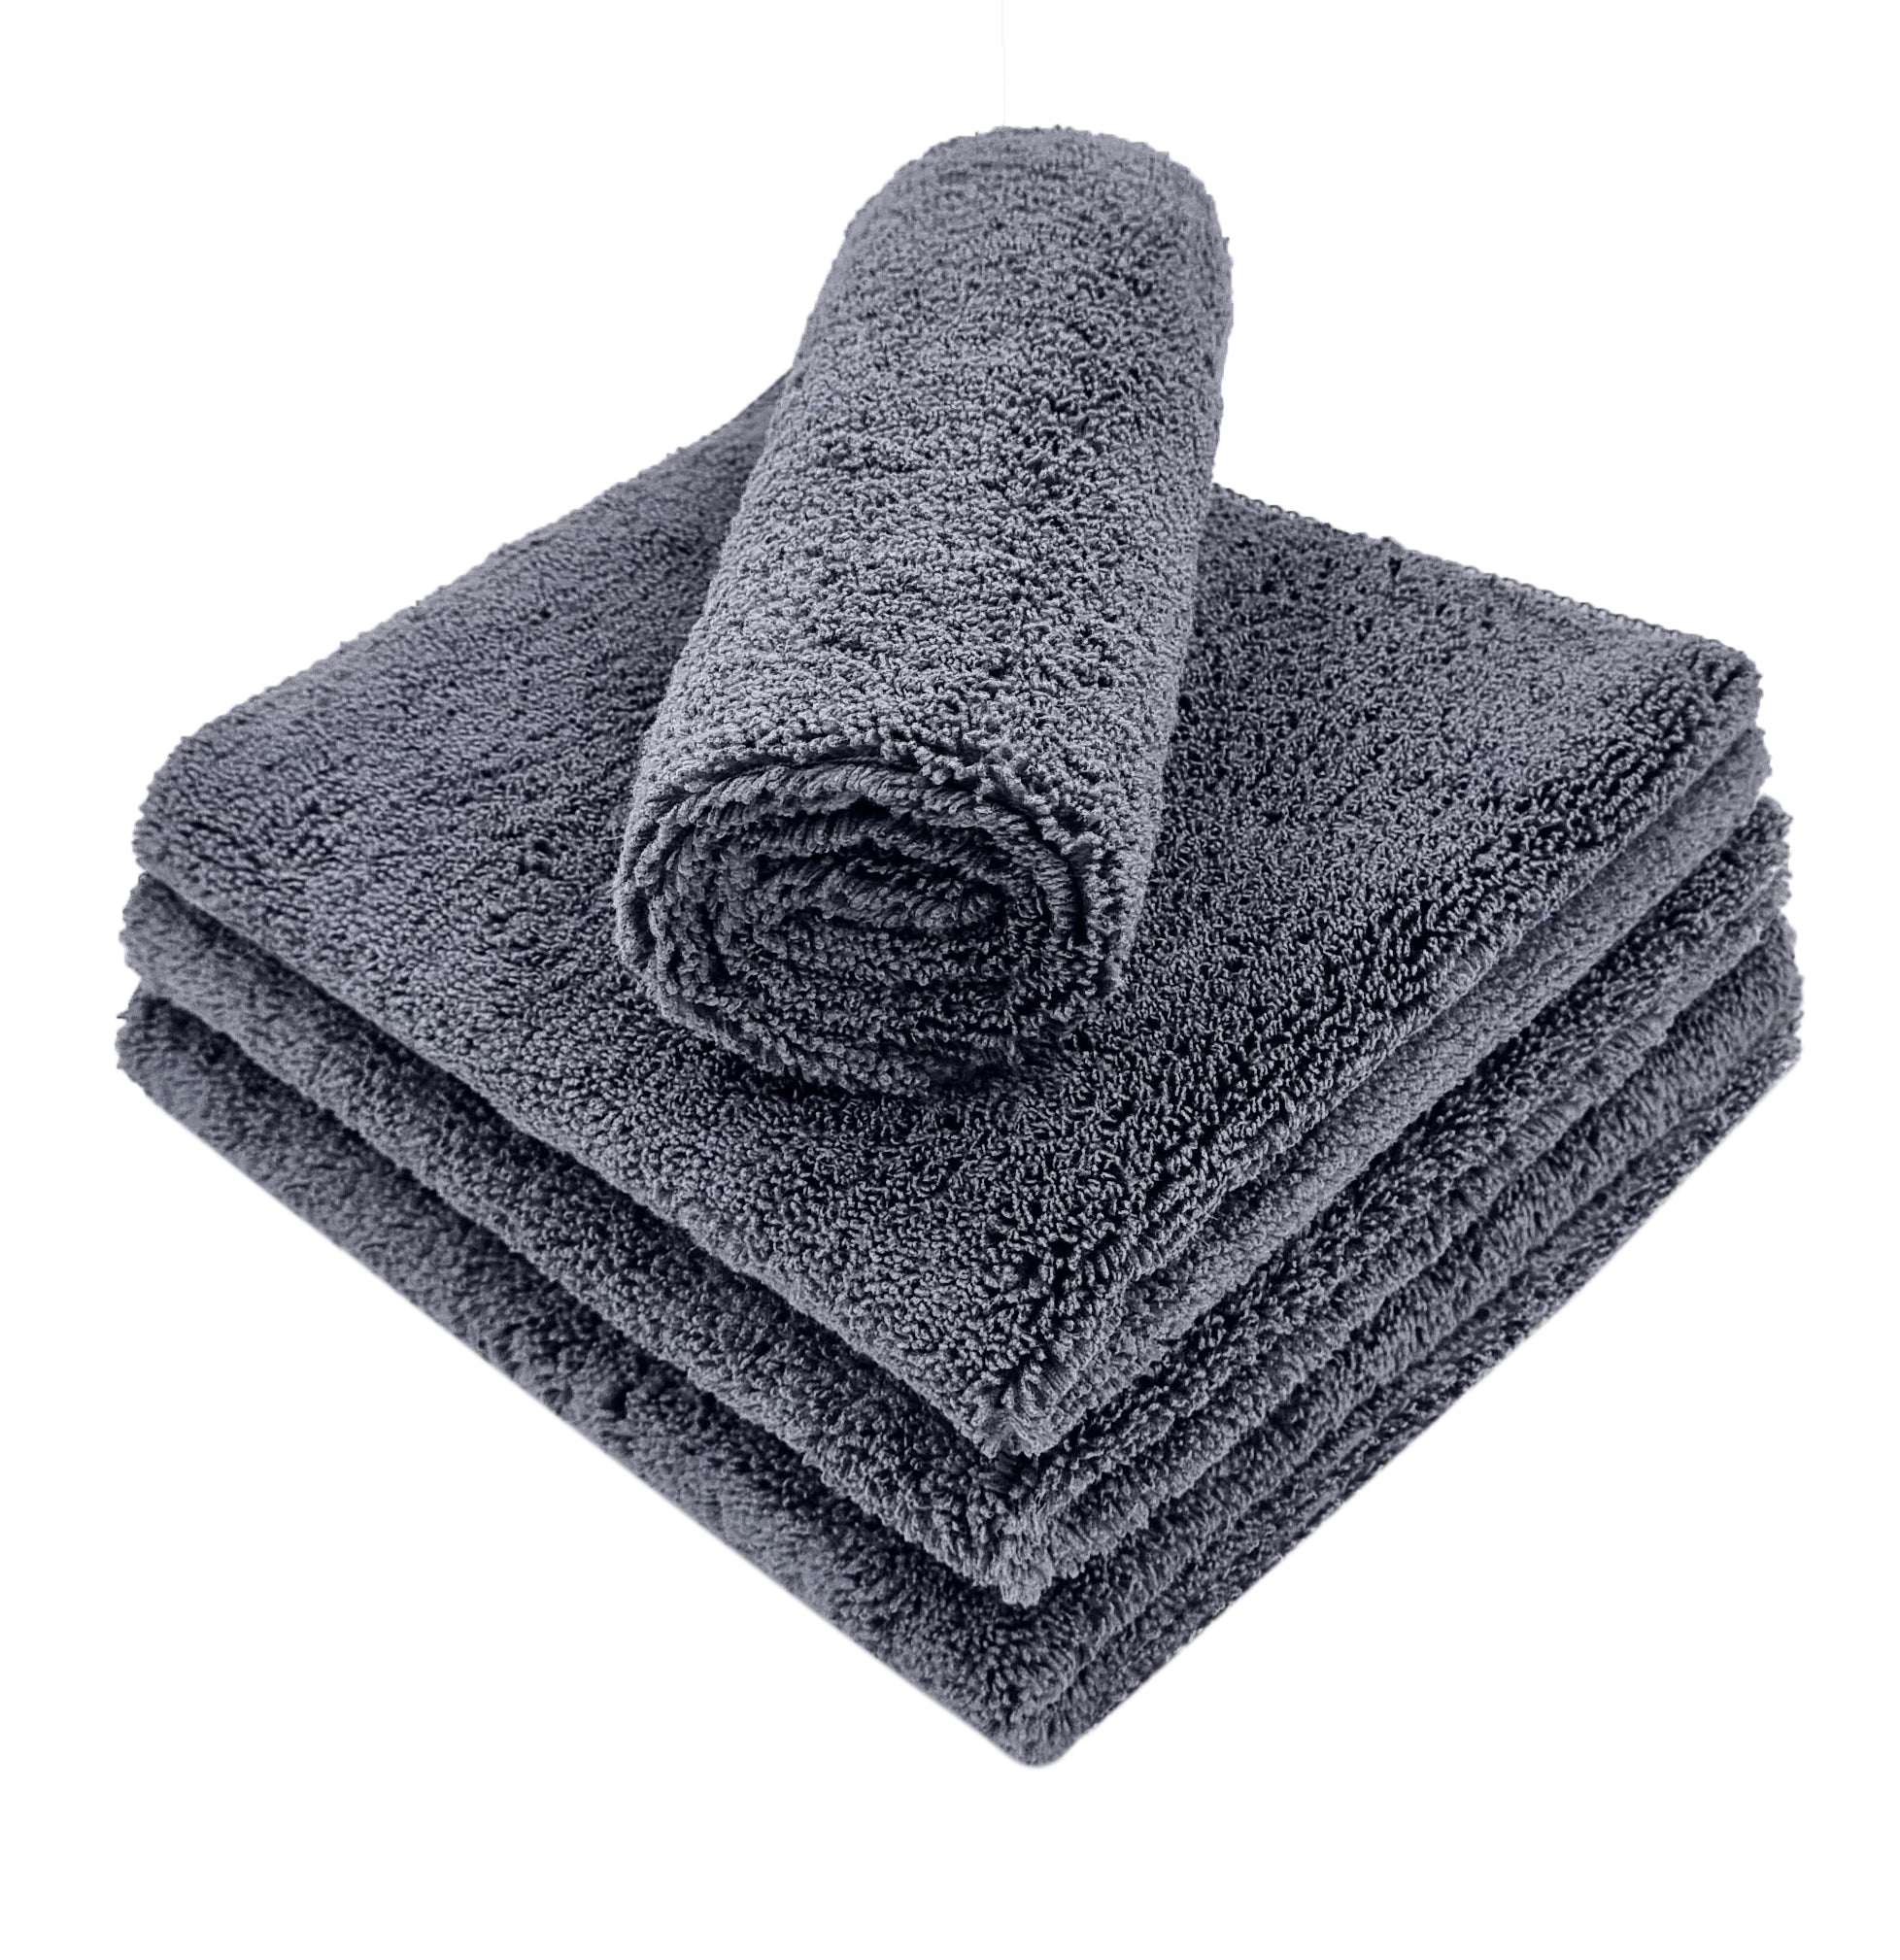 SOFTSPUN Microfiber 380 GSM High Loop Cleaning Cloths, Towel Set (Multi-Color). Thick Lint & Streak-Free Multipurpose Cloths.